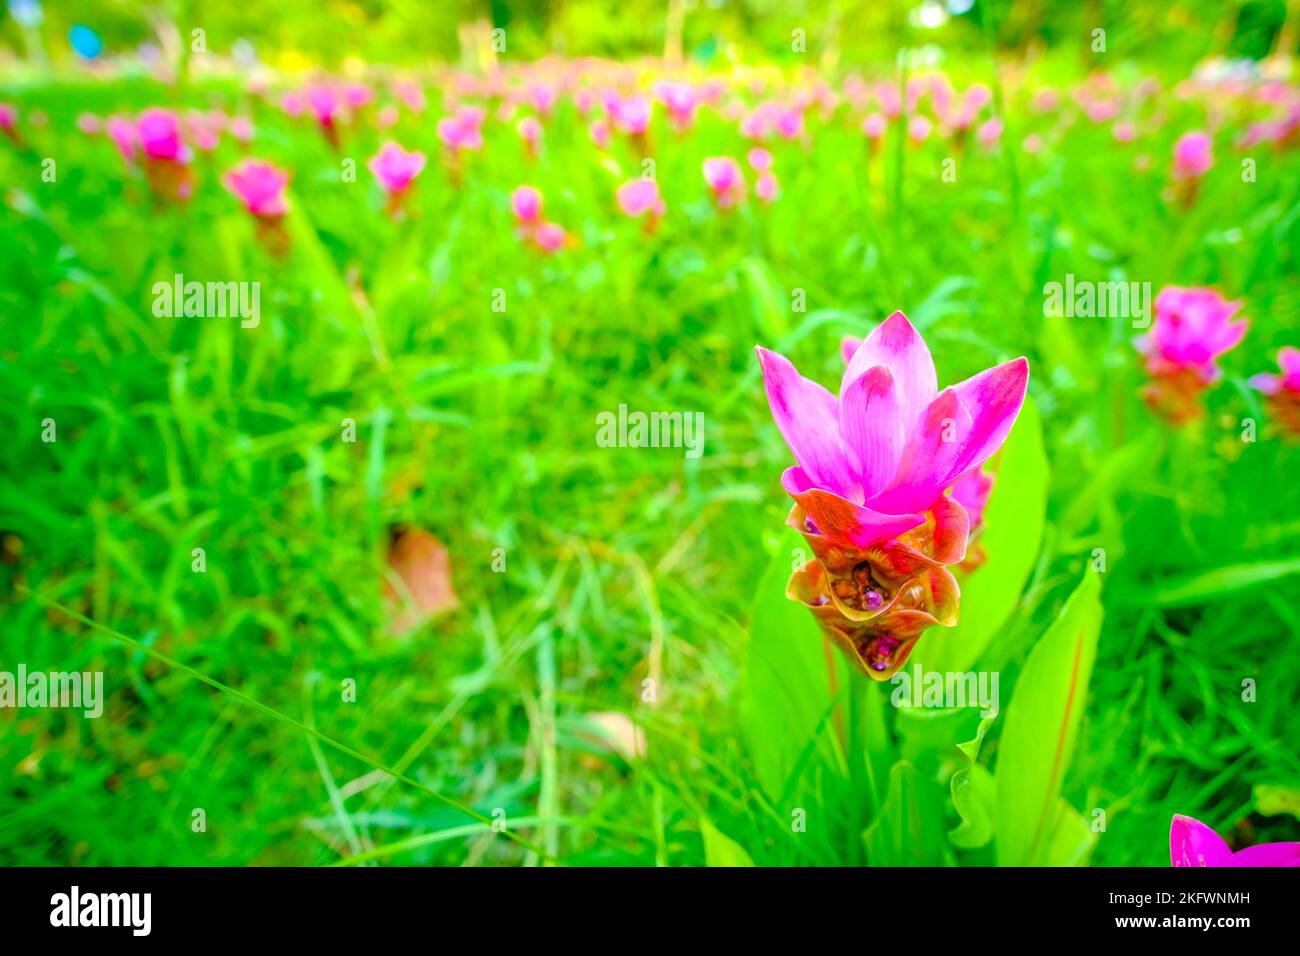 Bunte rosa Blume Wilde Siam Tulpen blühende Natur Hintergrund Stockfoto